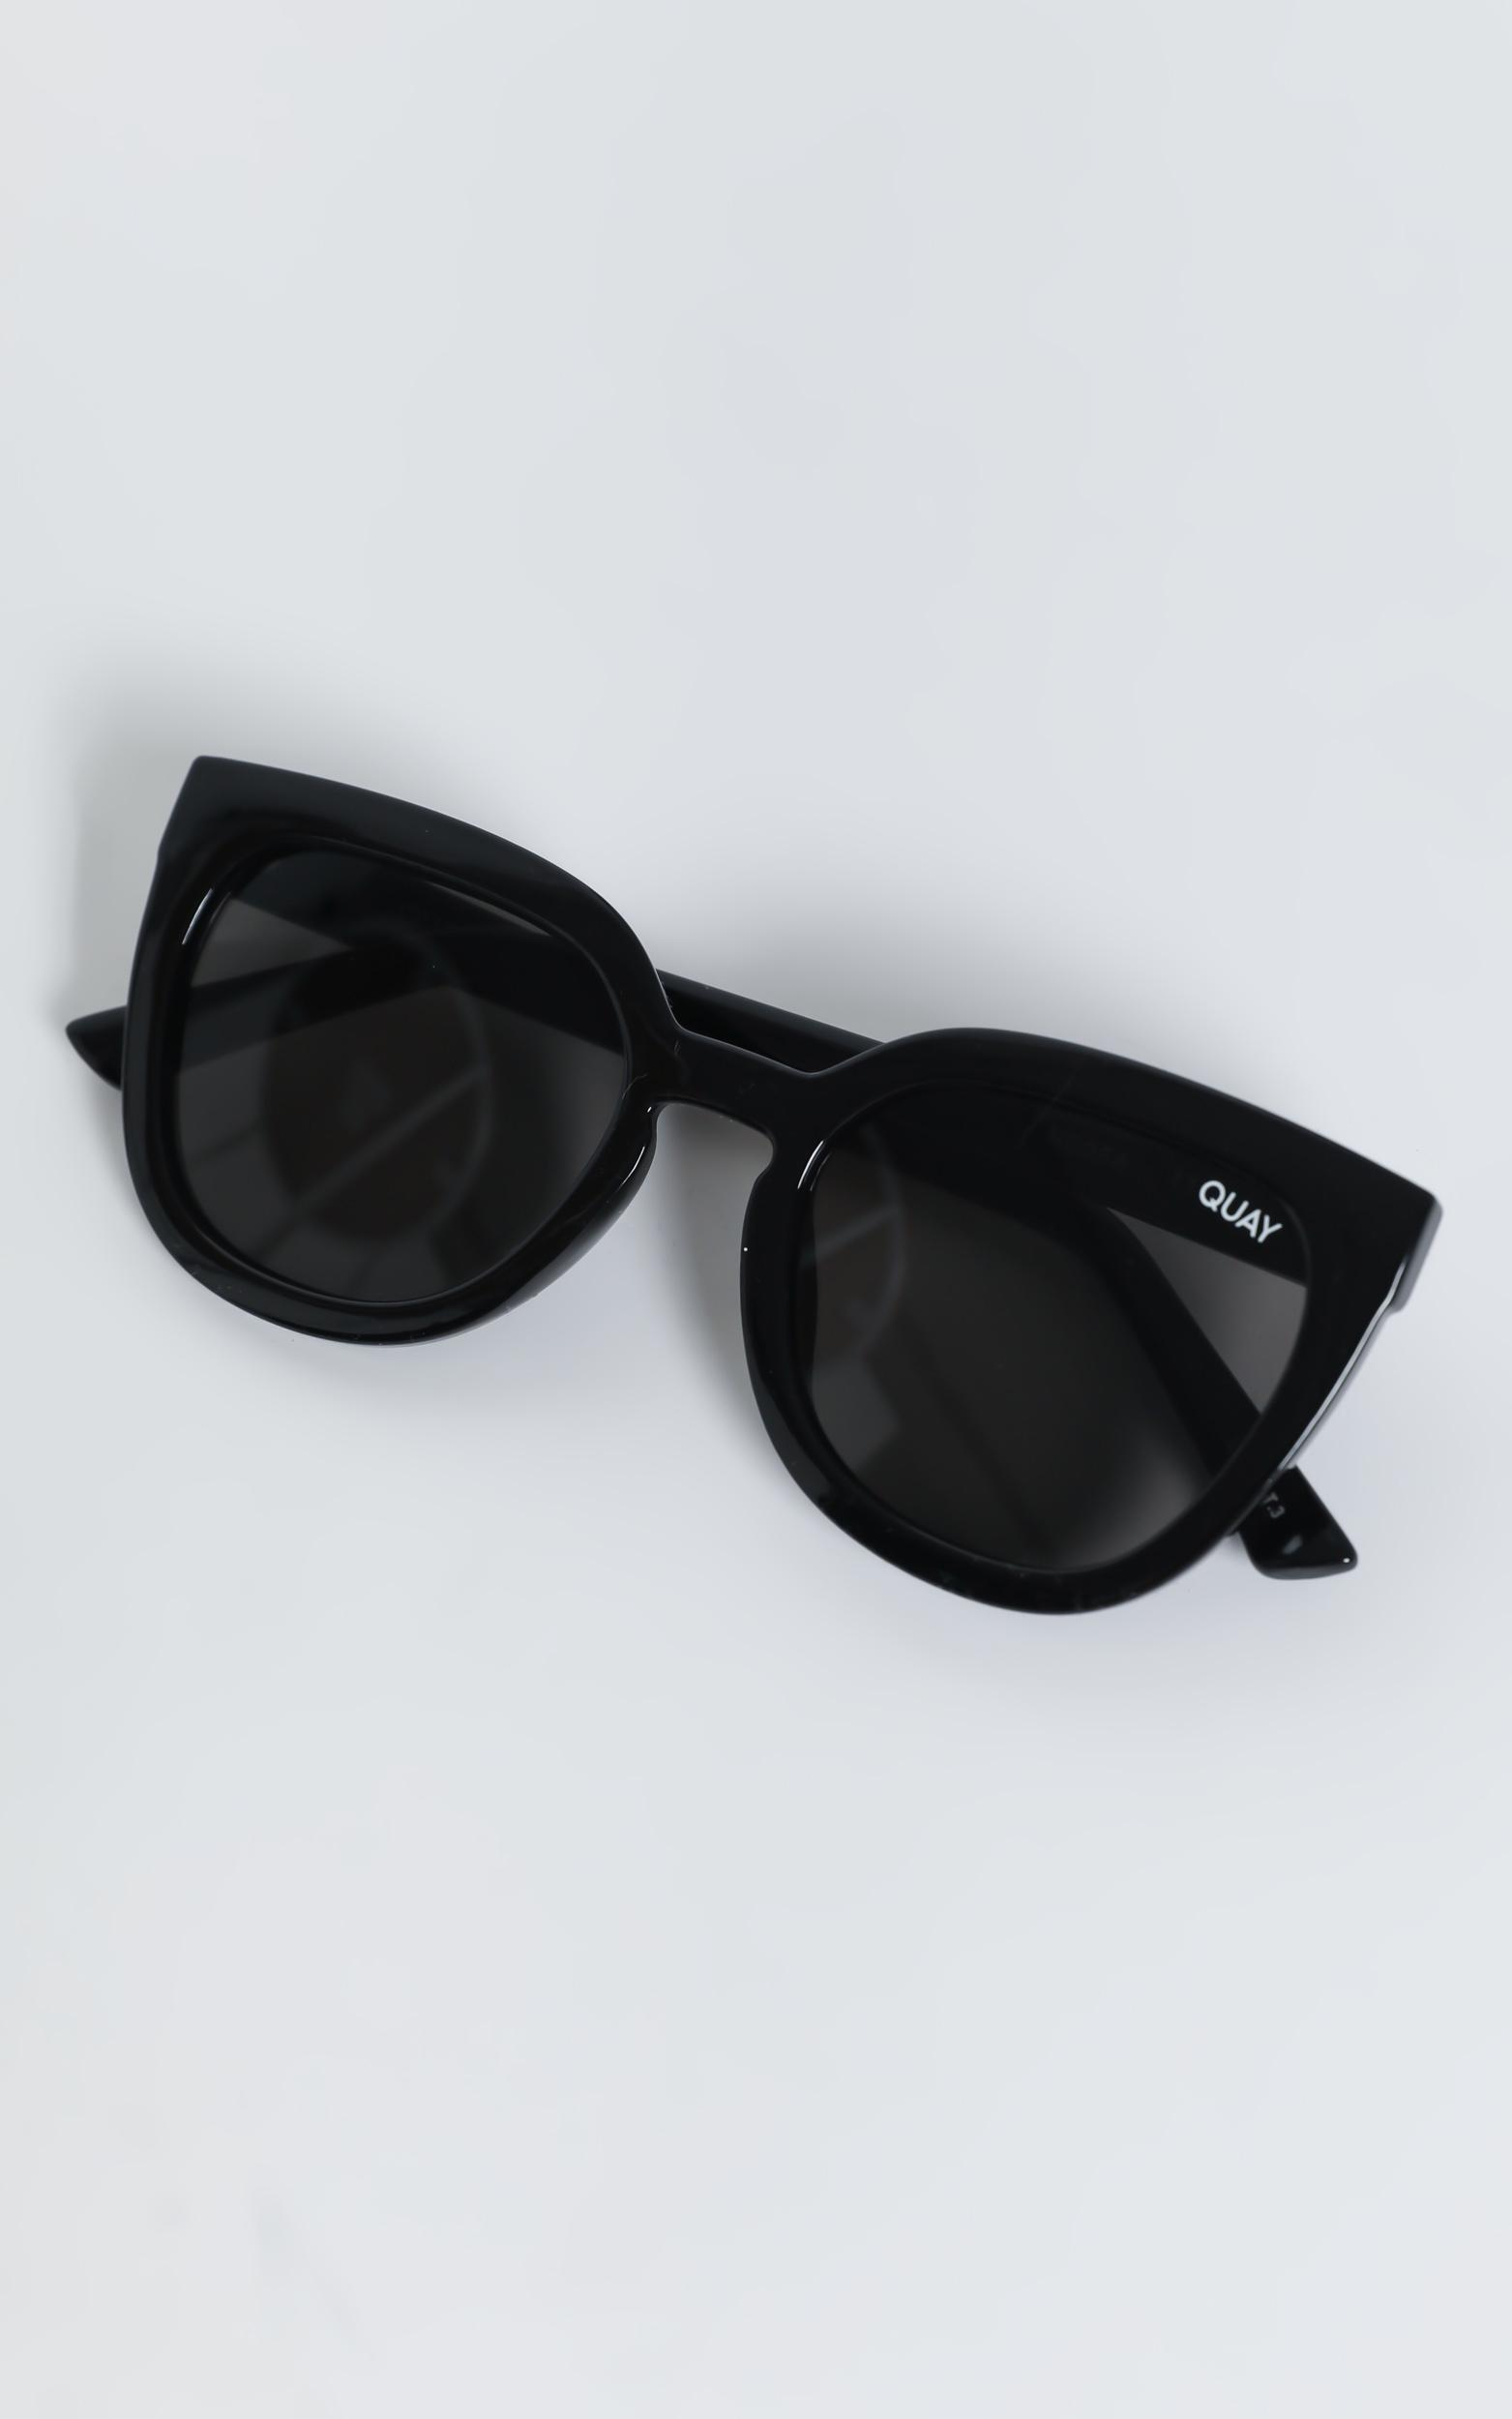 Quay - Noosa Sunglasses in Shiny Black / Smoke | Showpo